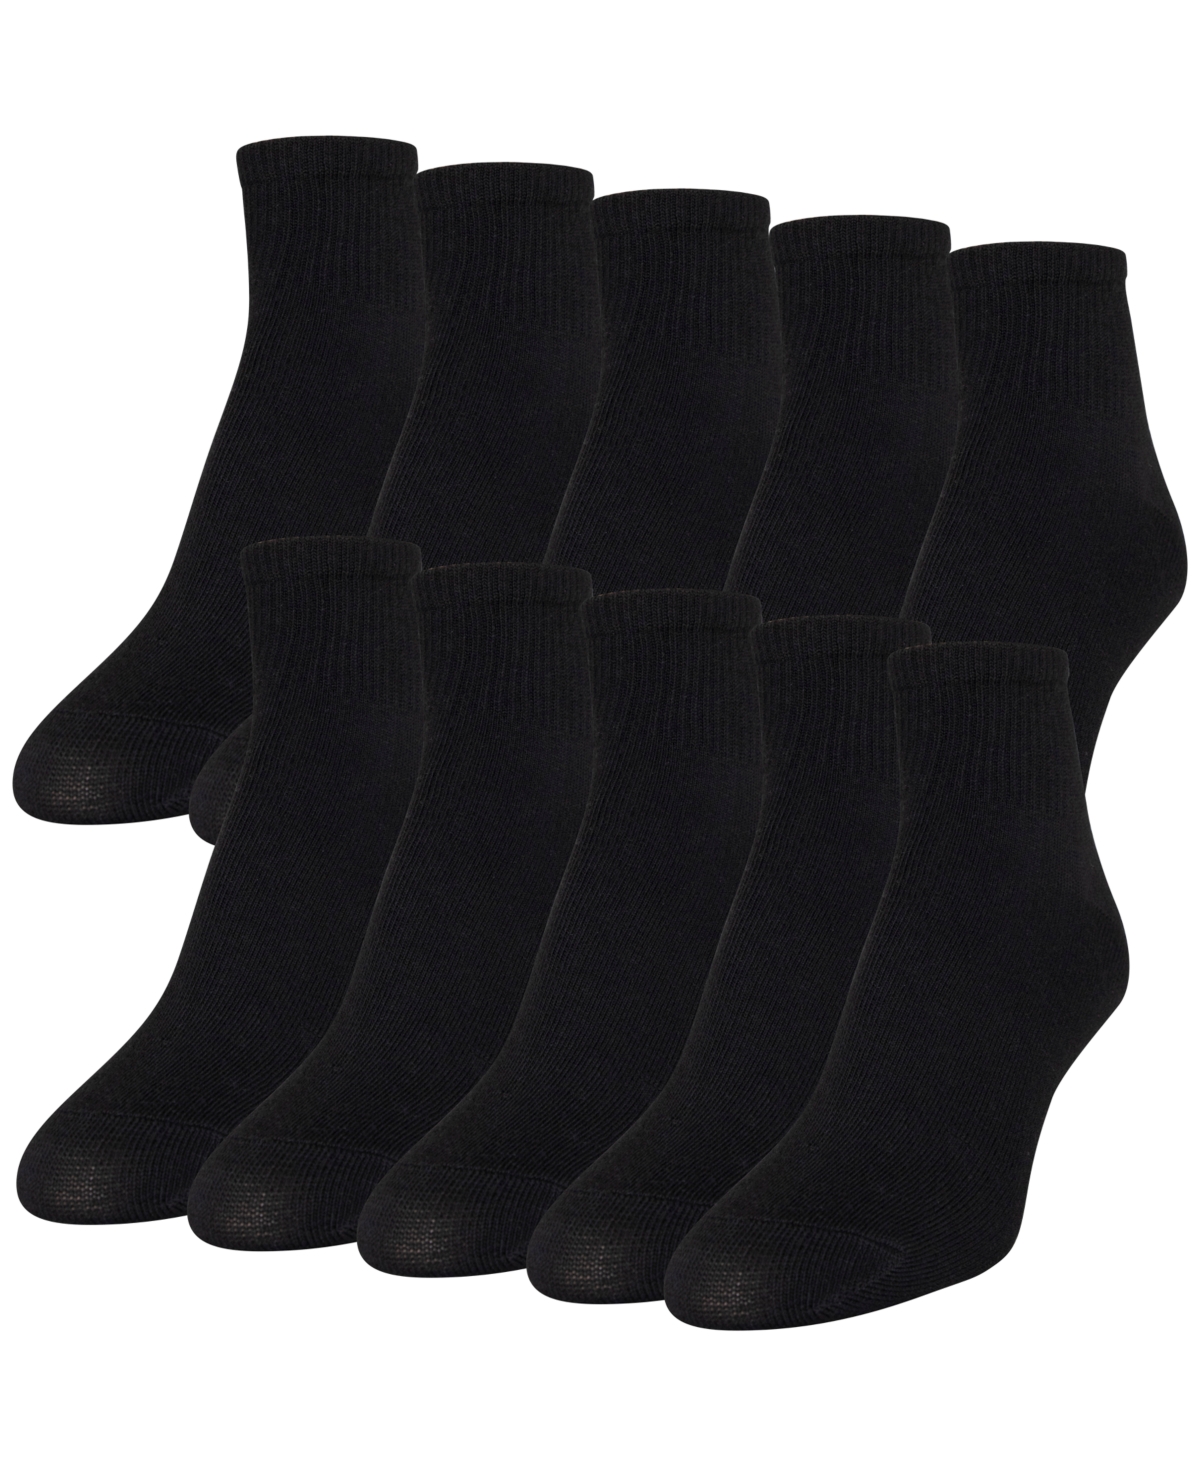 Women's 10-Pack Casual Lightweight Ankle Socks - Black